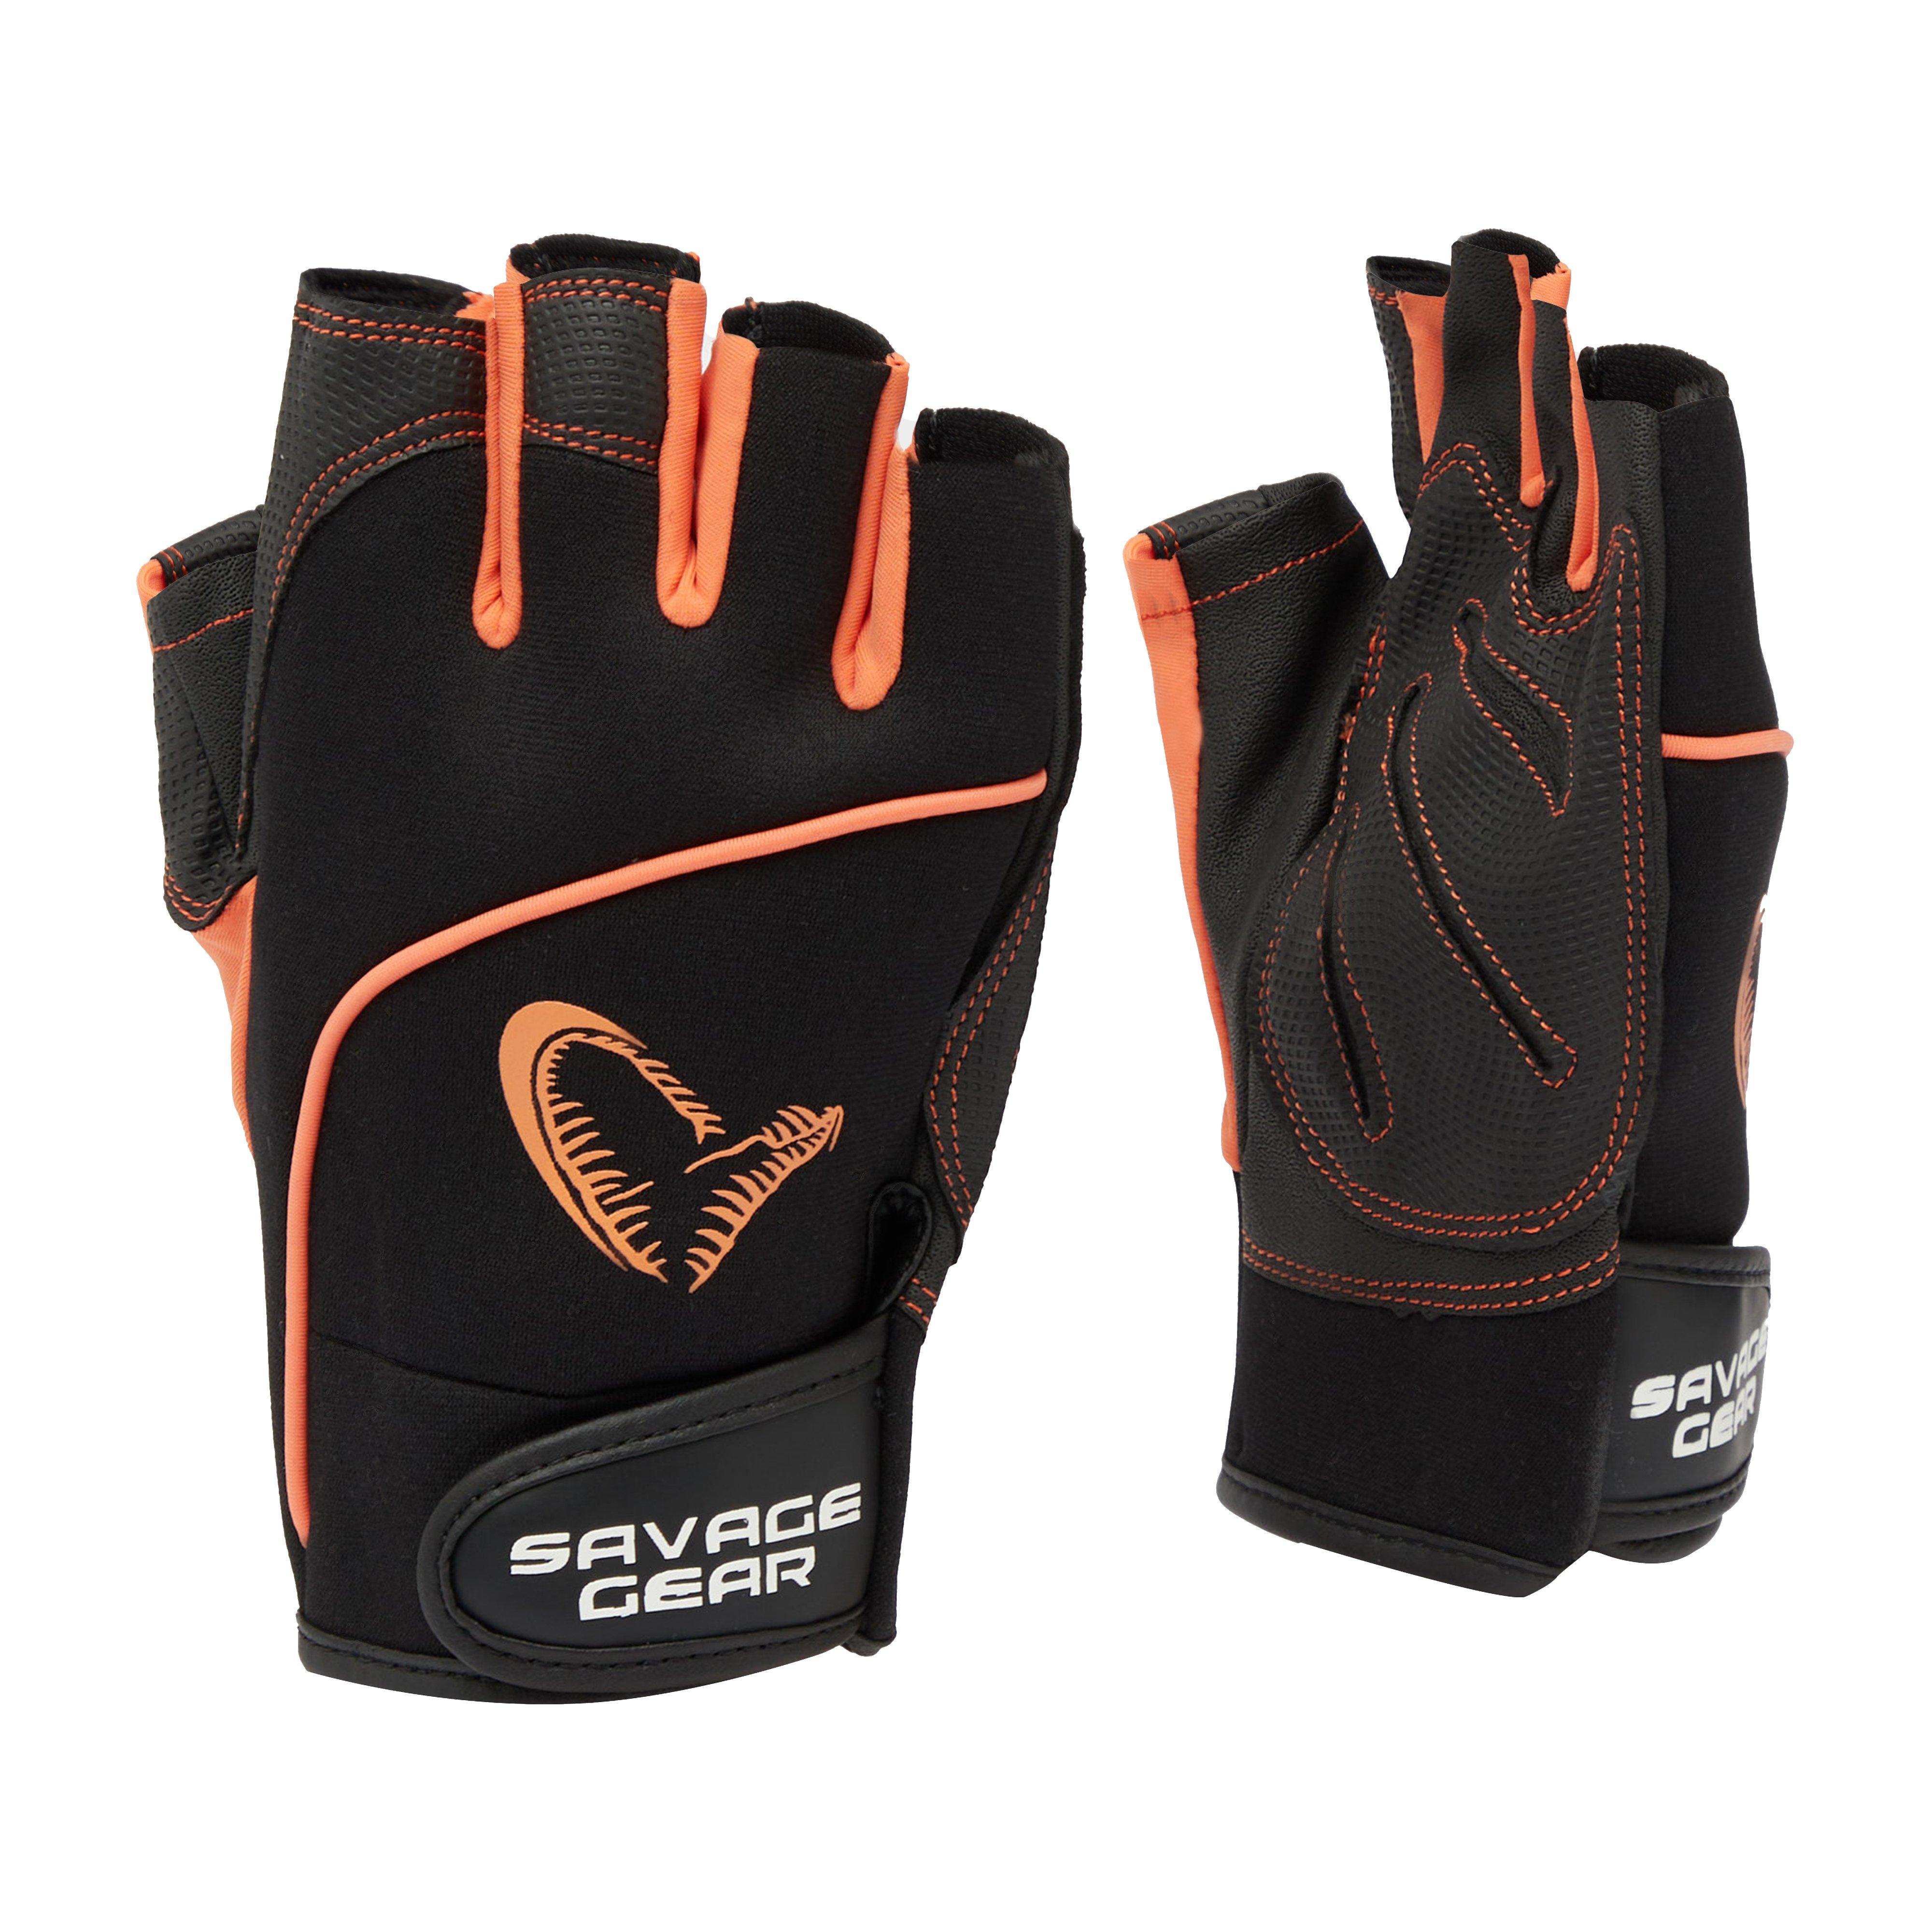 Svendsen Protec Gloves (Size M) Review